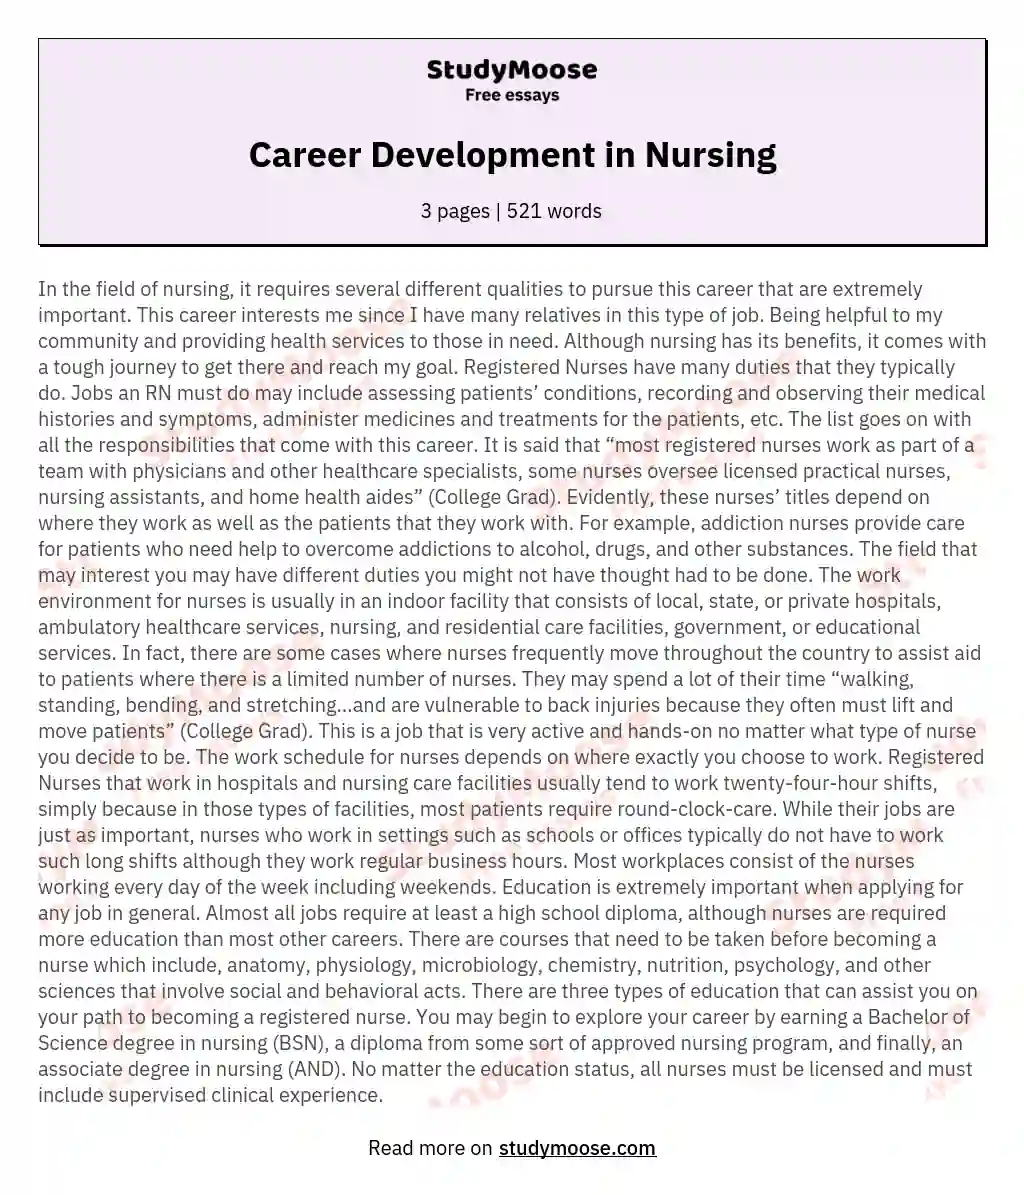 Career Development in Nursing